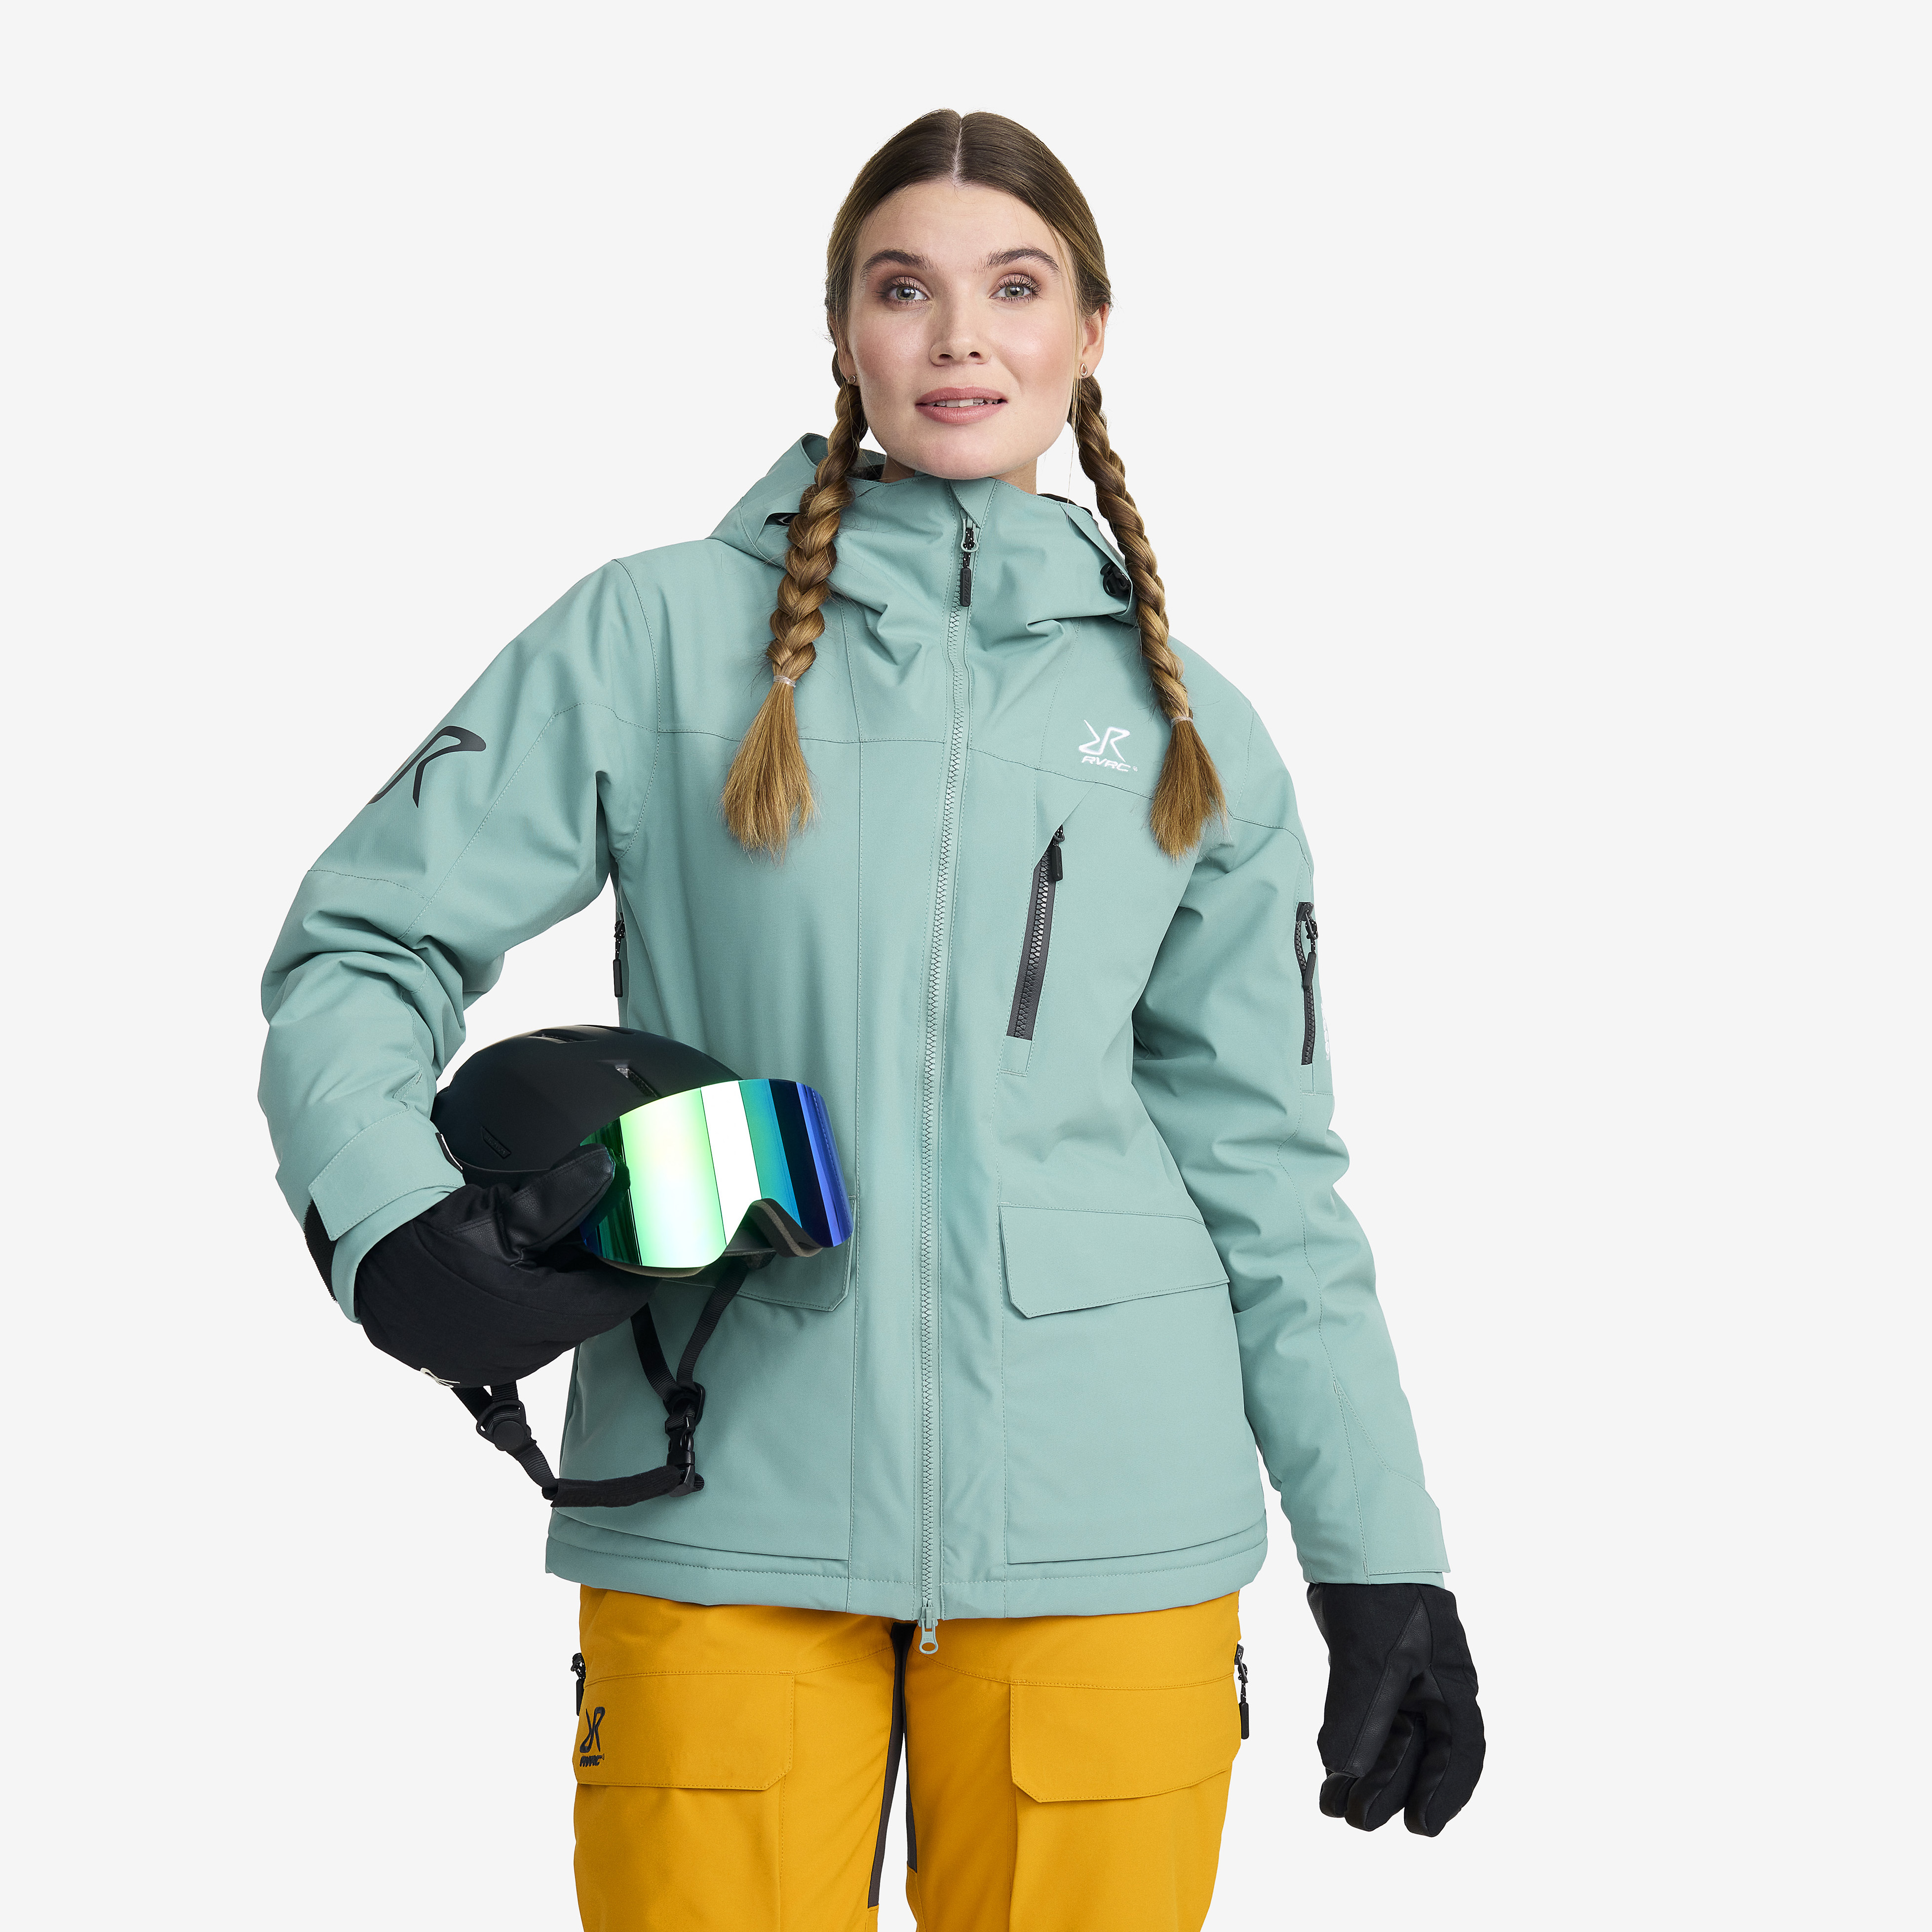 Halo 2L Insulated Ski Jacket Arctic Mujeres